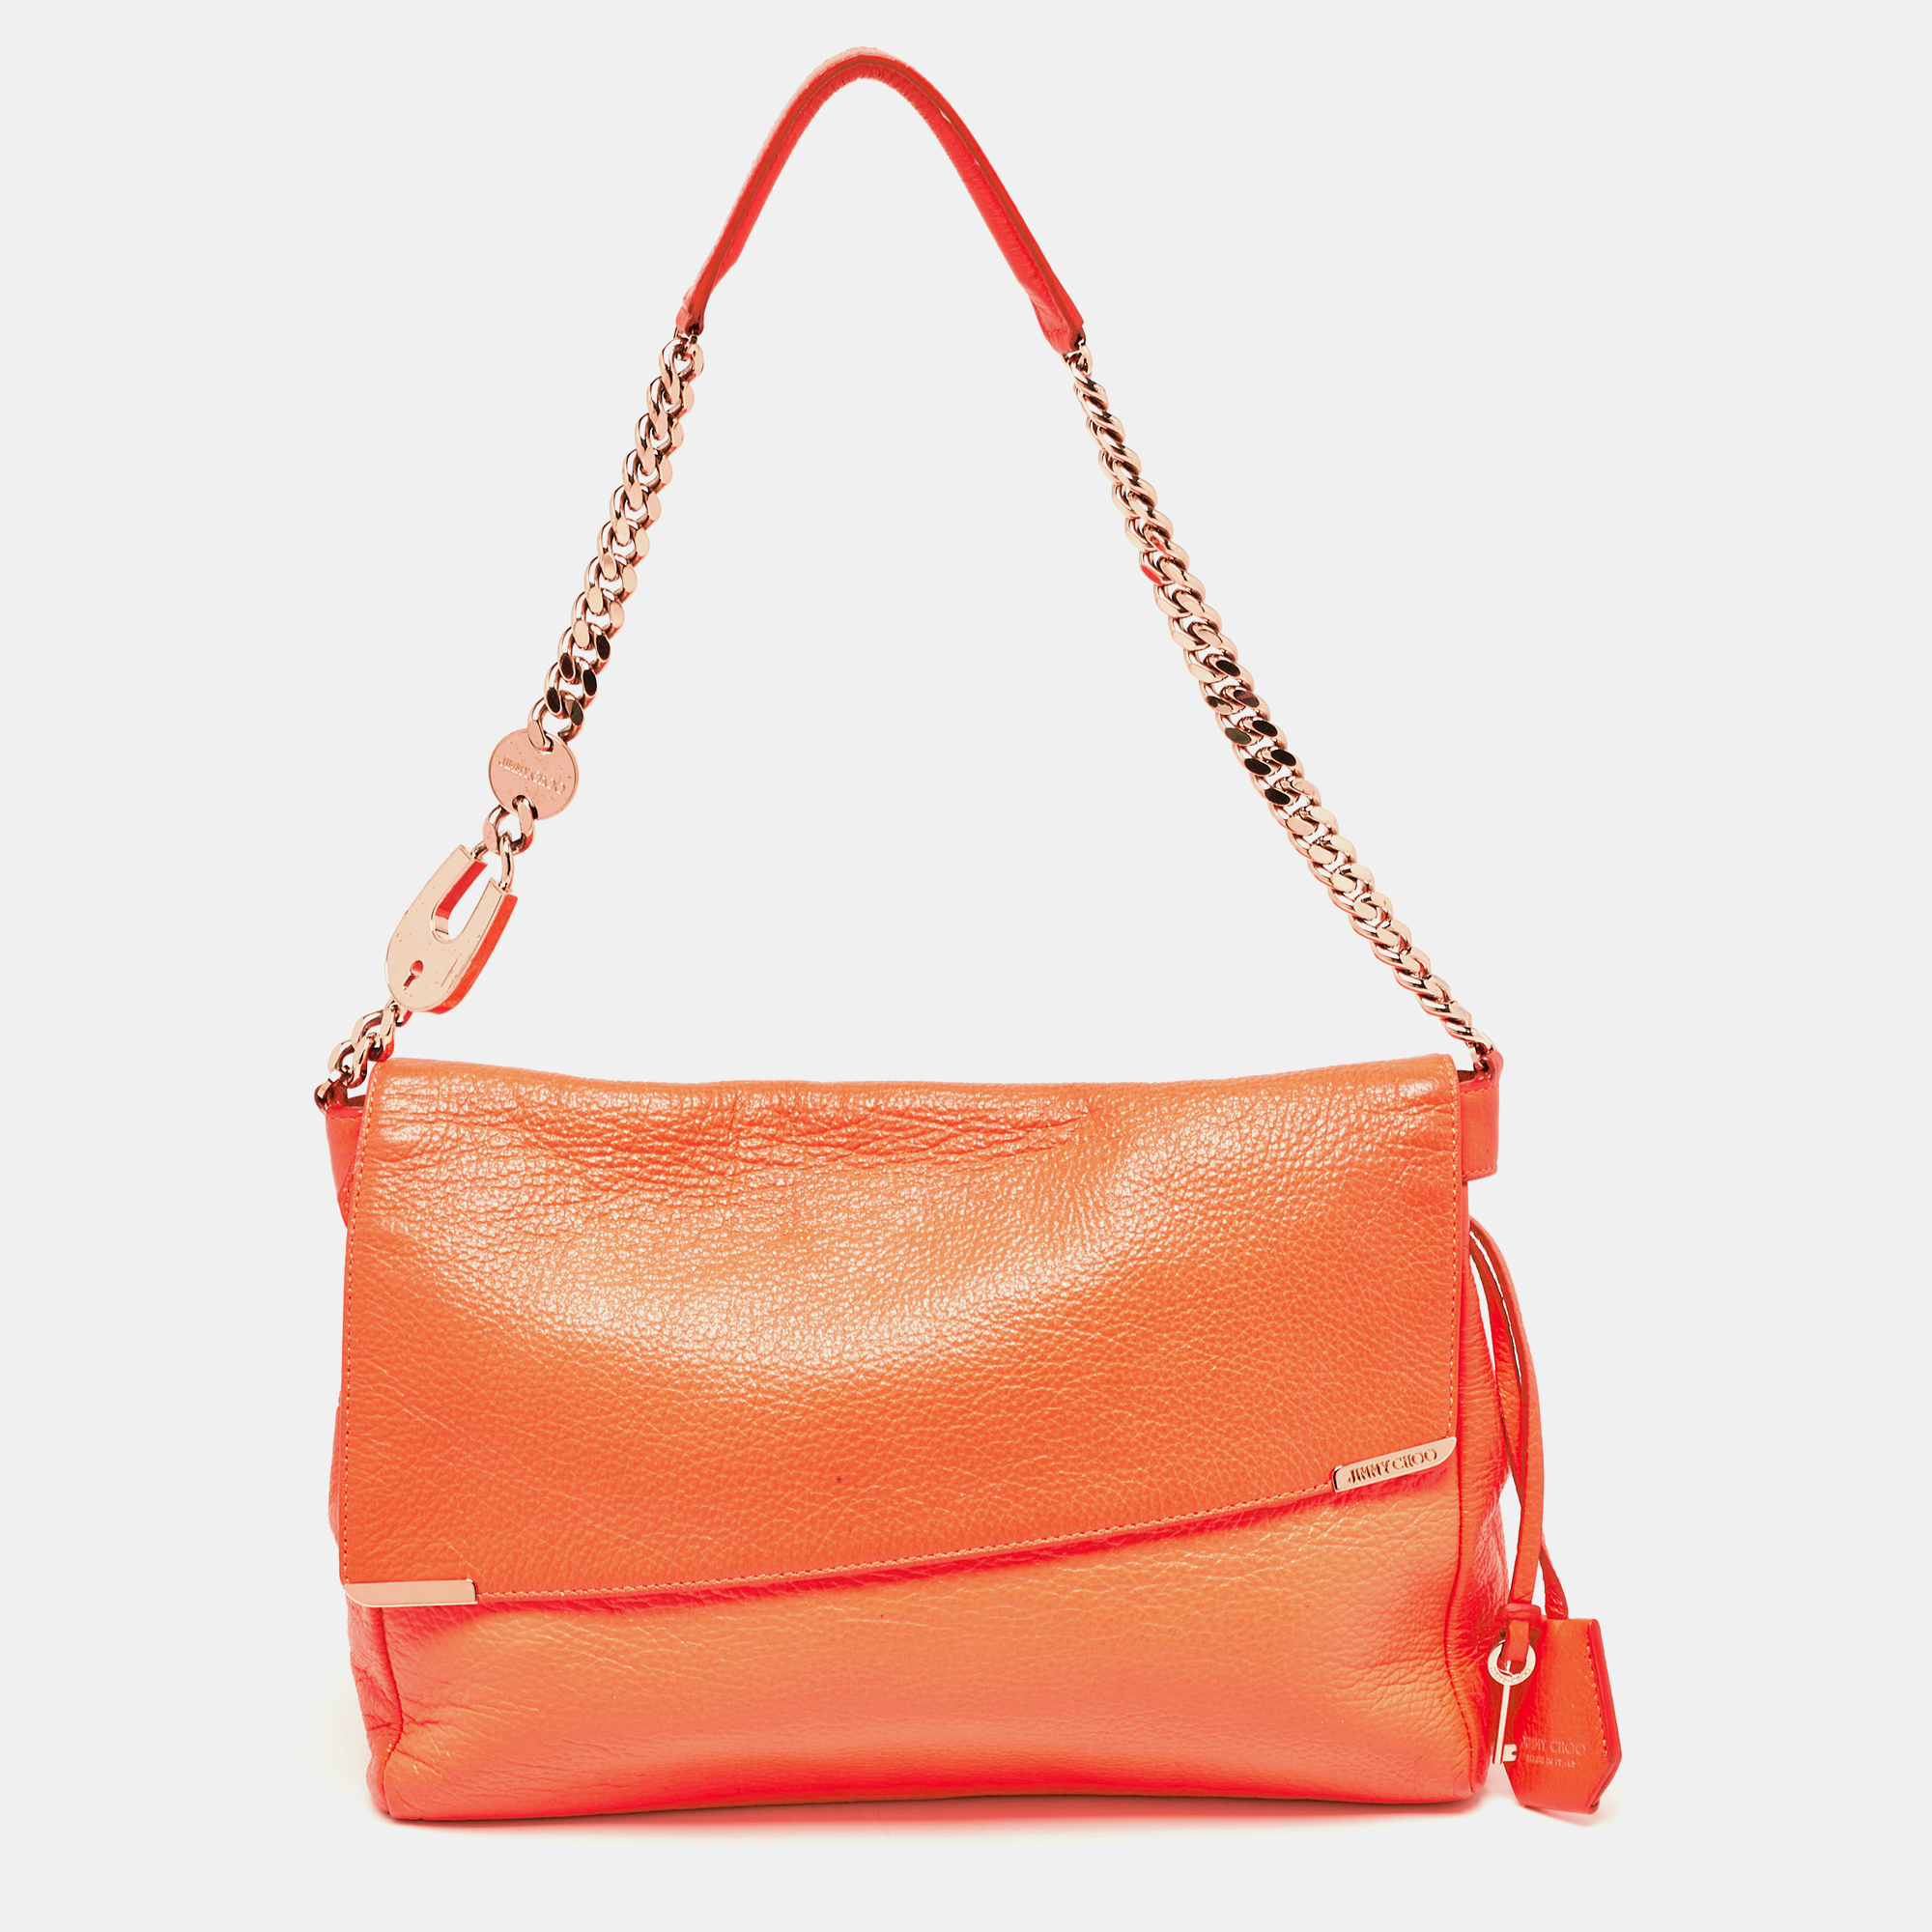 Pre-owned Jimmy Choo Neon Orange Leather Flap Shoulder Bag